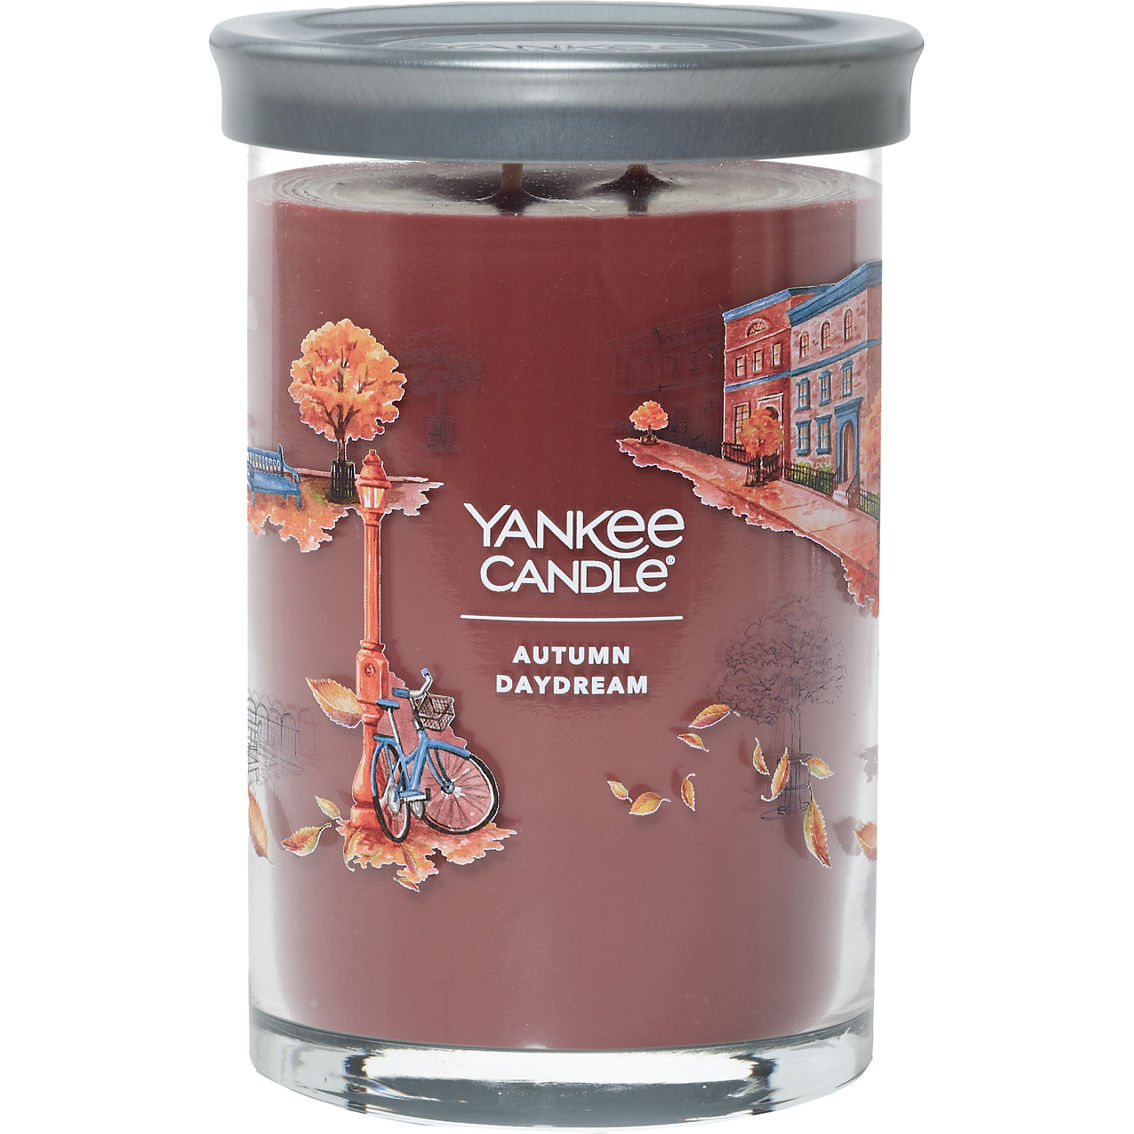 Yankee Candle Autumn Daydream Signature Large Tumbler Candle | Candles ...